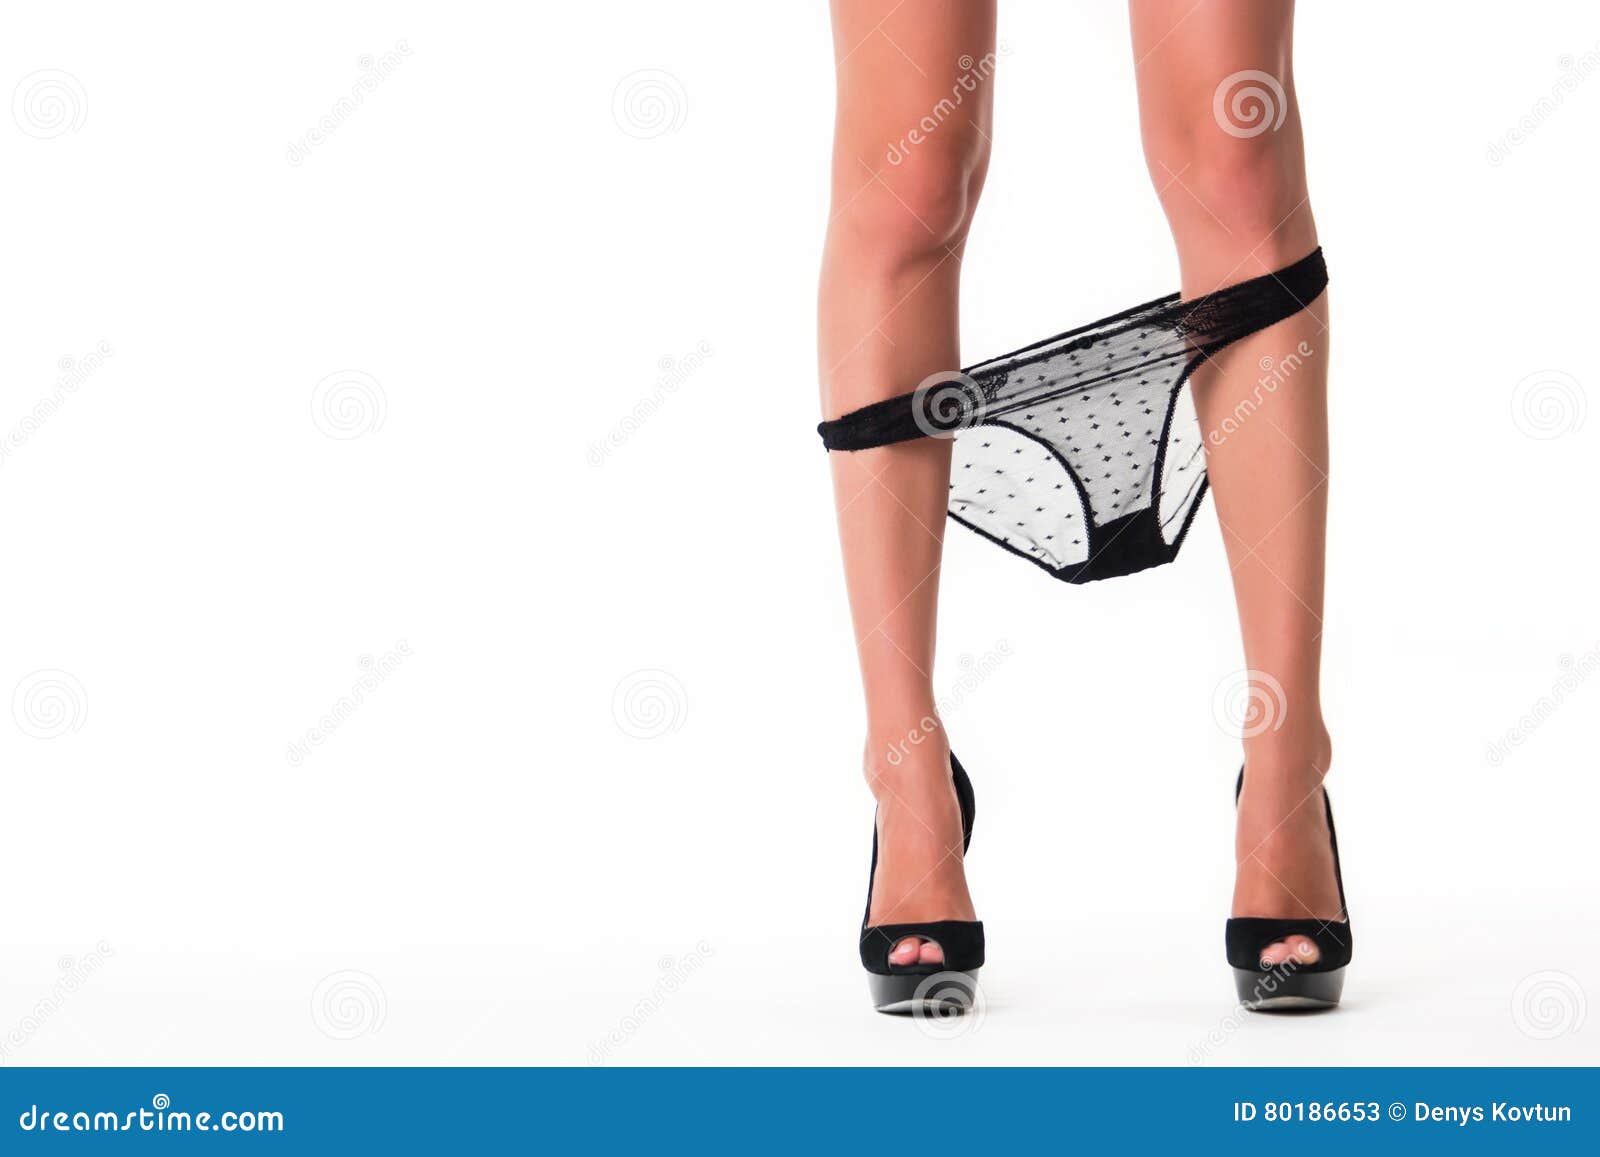 https://thumbs.dreamstime.com/z/female-legs-panties-down-black-underwear-shoes-passion-wakes-seduction-sensuality-80186653.jpg